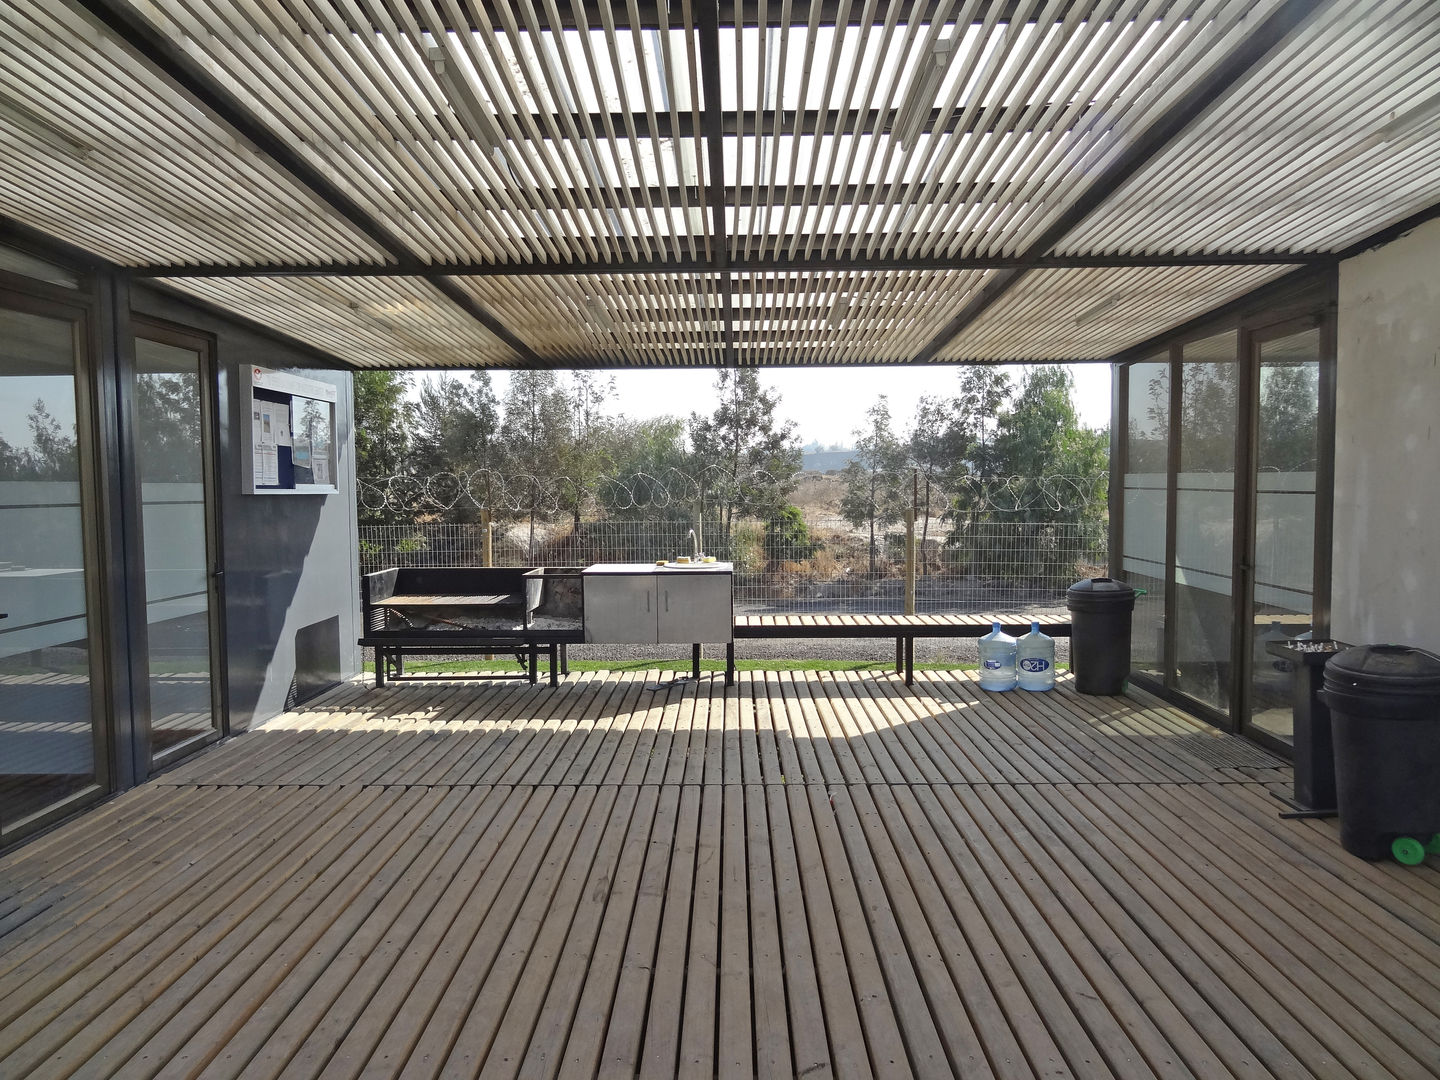 Oficinas Modulares Transportables, m2 estudio arquitectos - Santiago m2 estudio arquitectos - Santiago Treppe